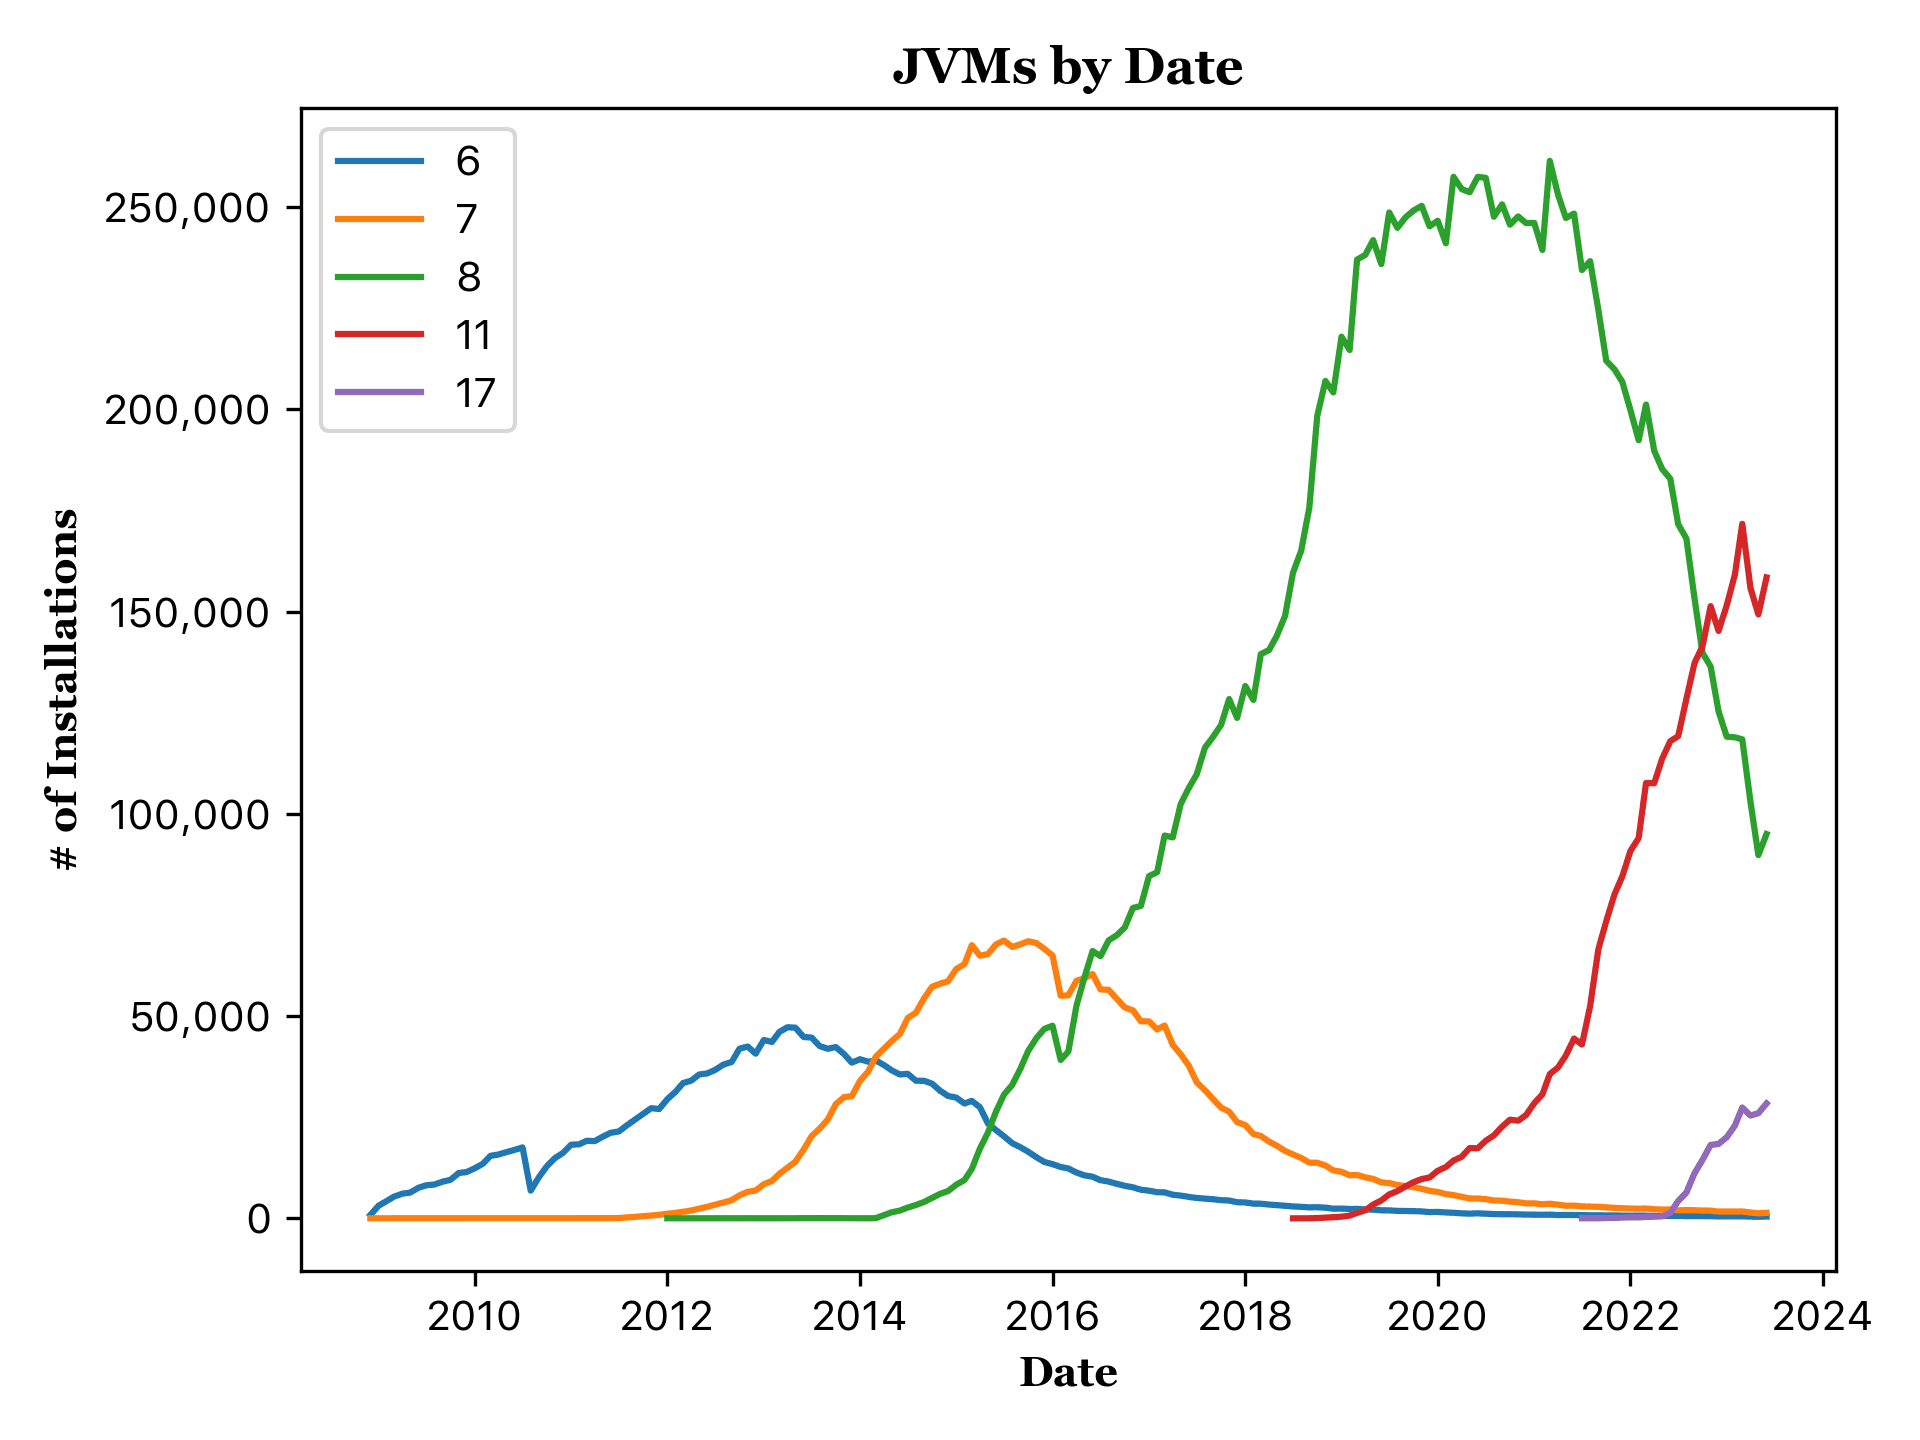 JDK versions use evolution